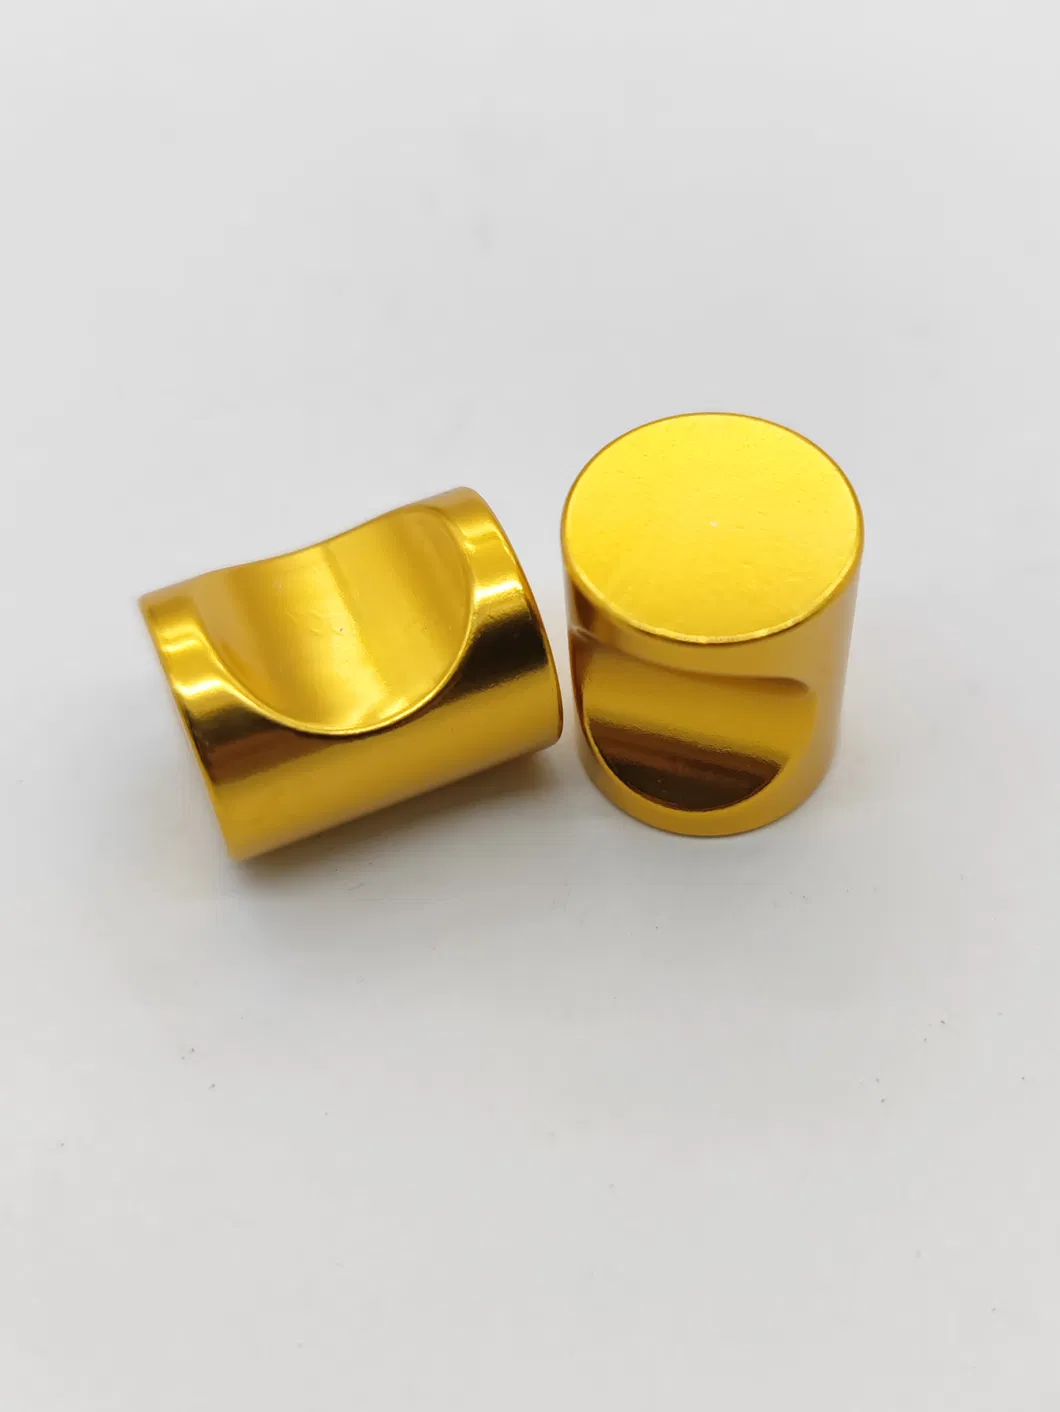 Furniture Aluminum Alloy Brass Golden Kitchen Cabinet Handle Pull Wardrobe Door Knob